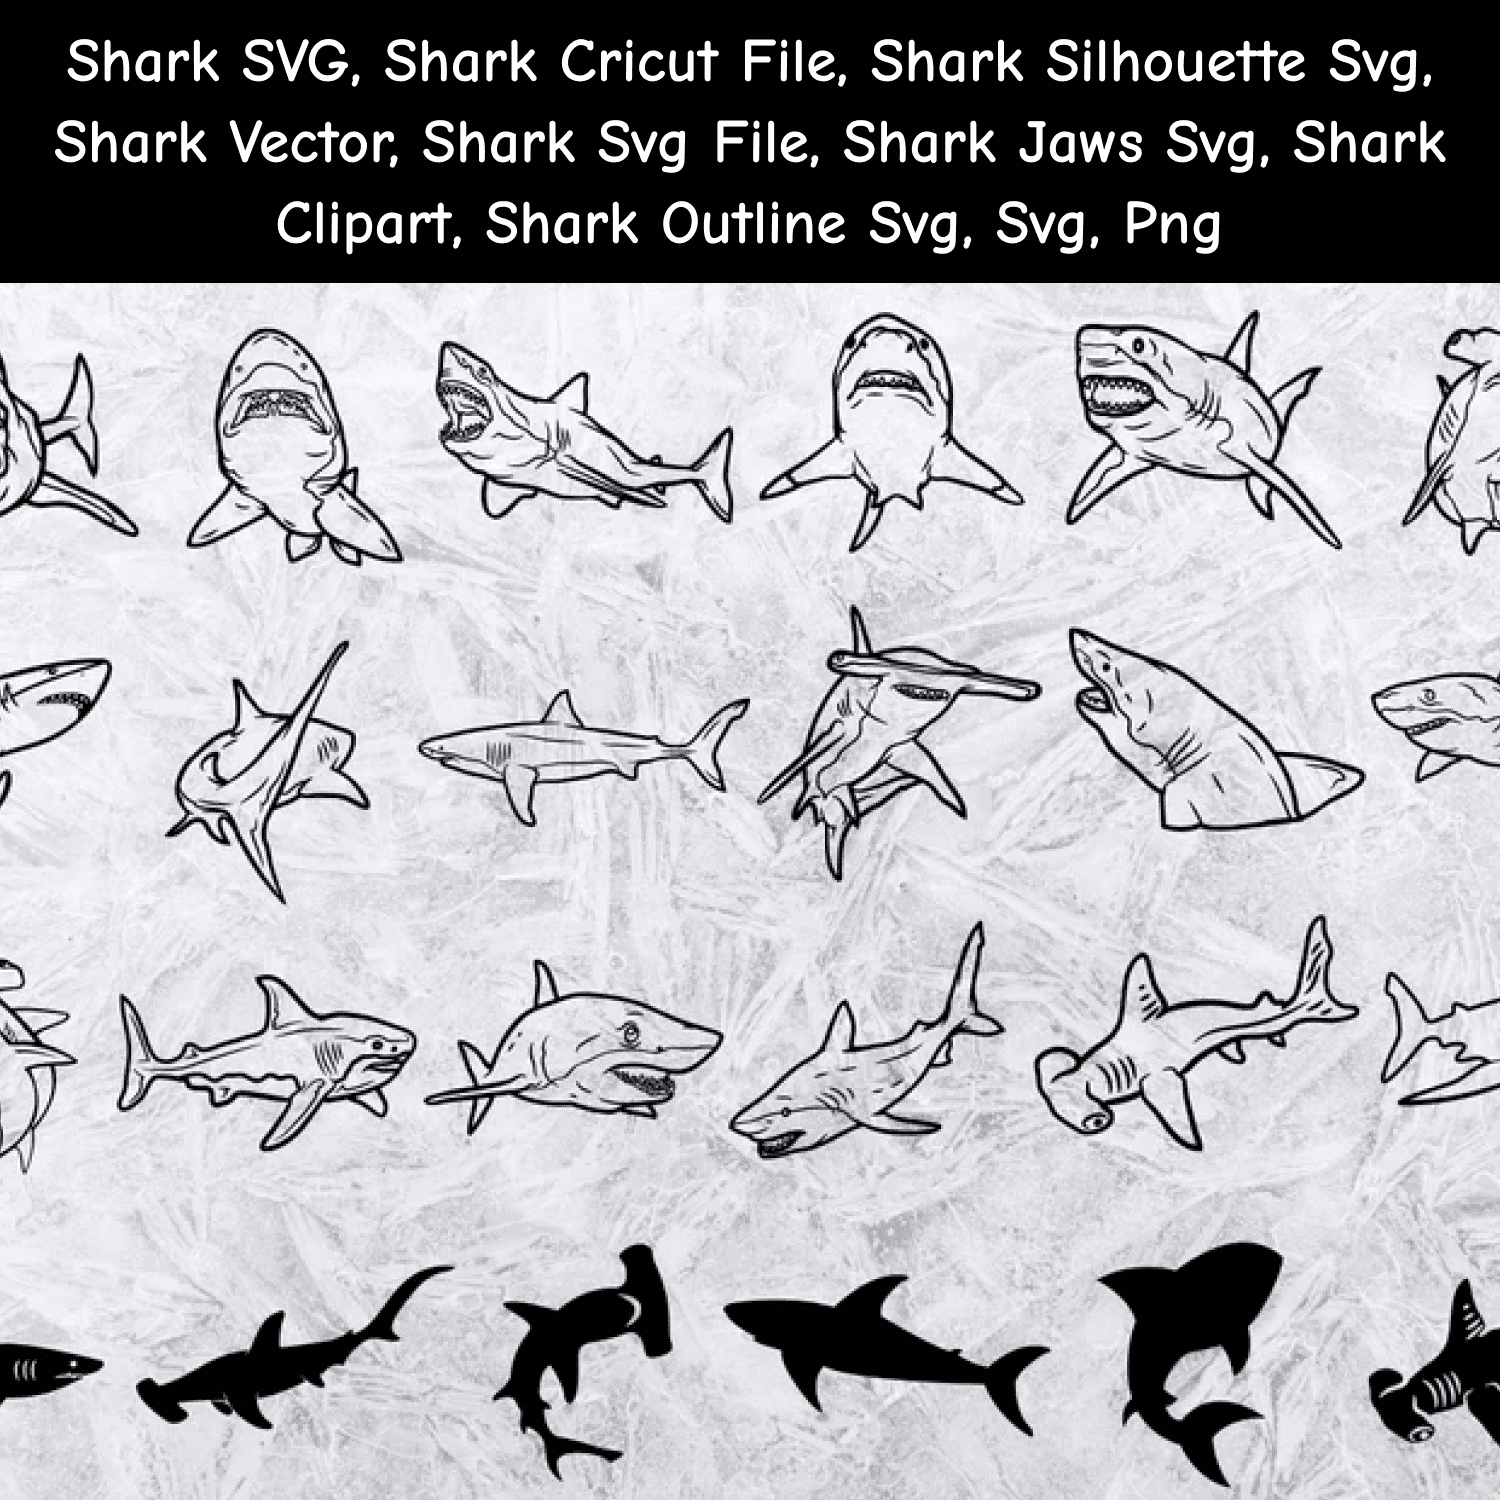 Shark Silhouette Svg.